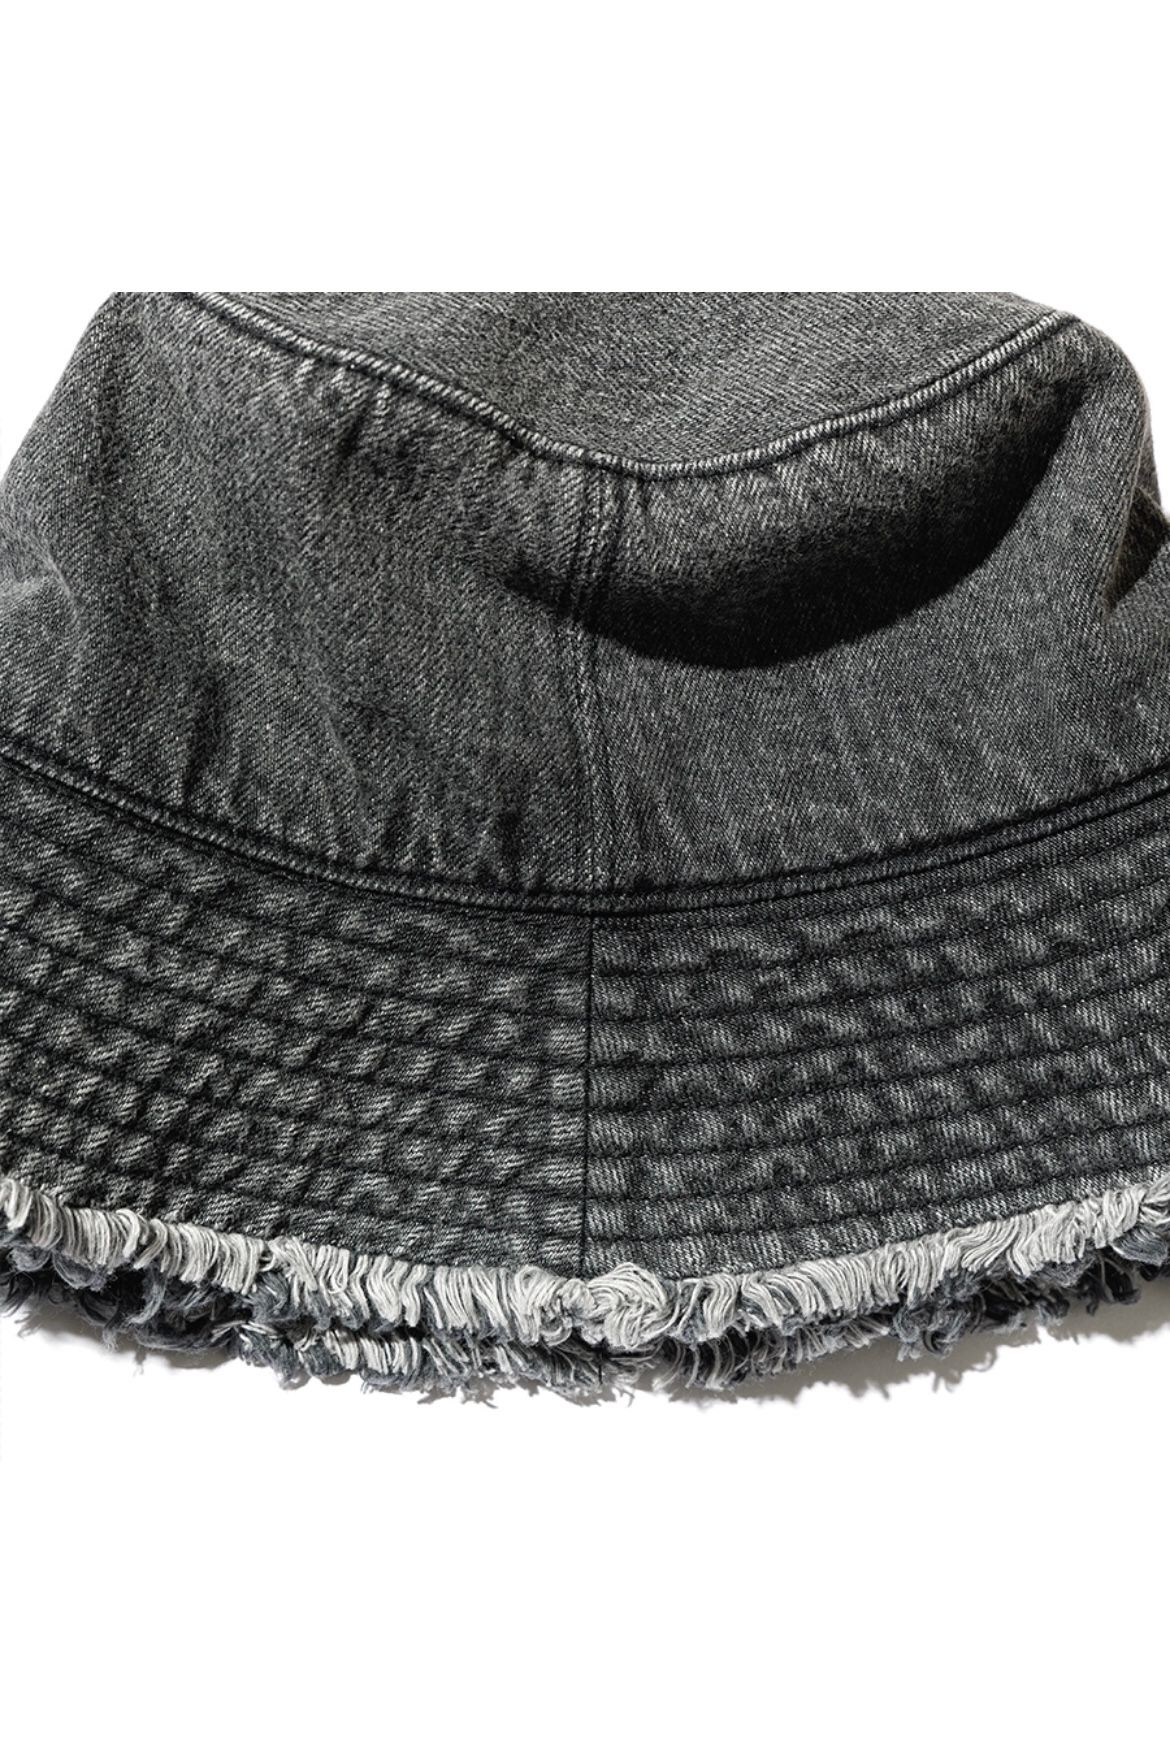 UNUSED - 12.5oz denim hat -black- 23ss | asterisk